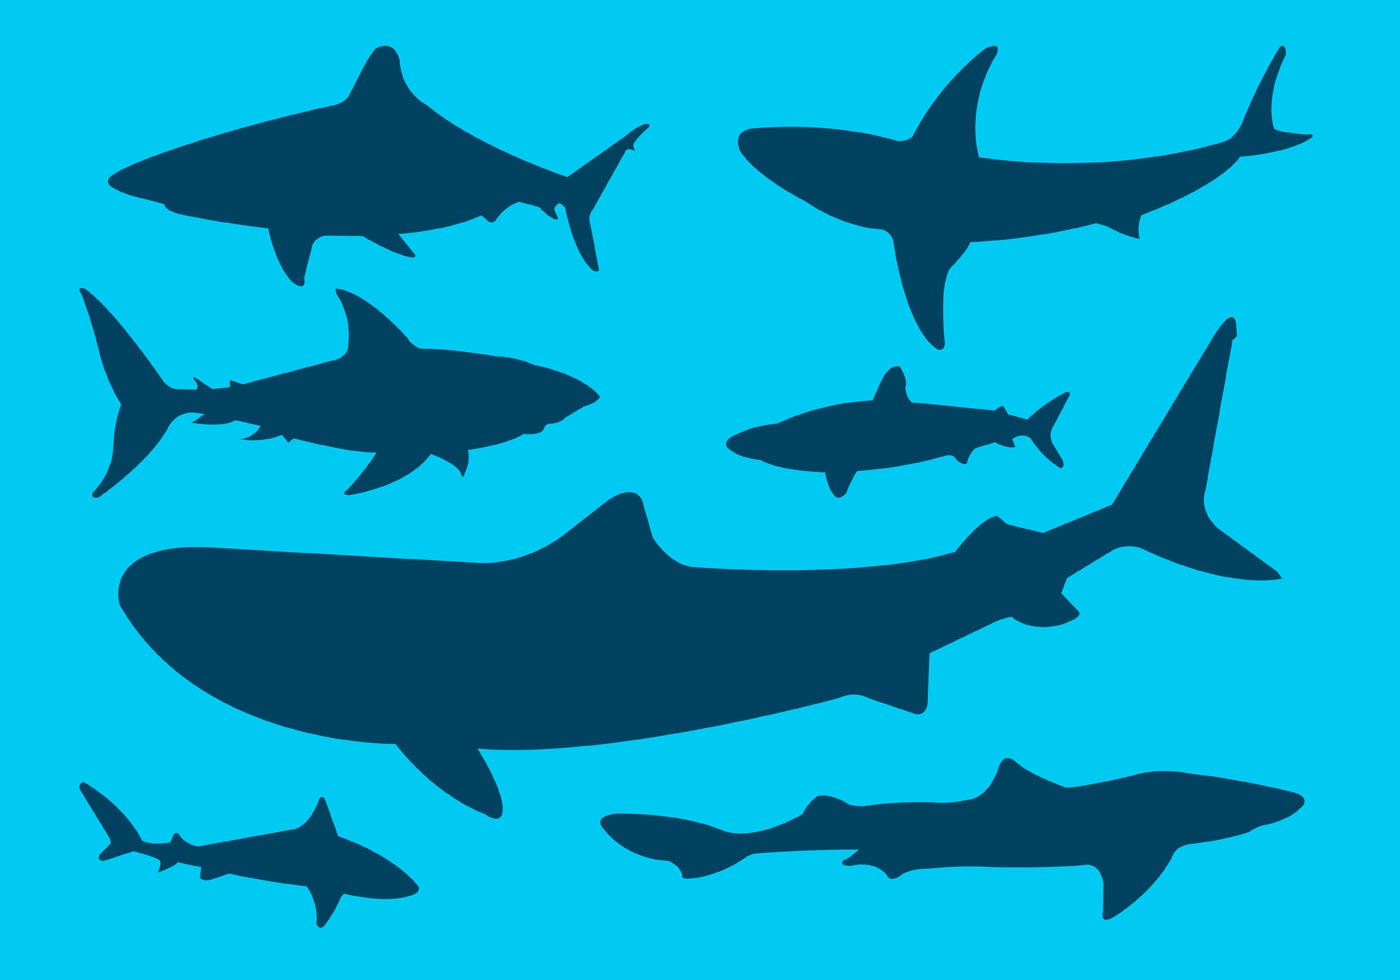 Cute Shark Silhouette SVG